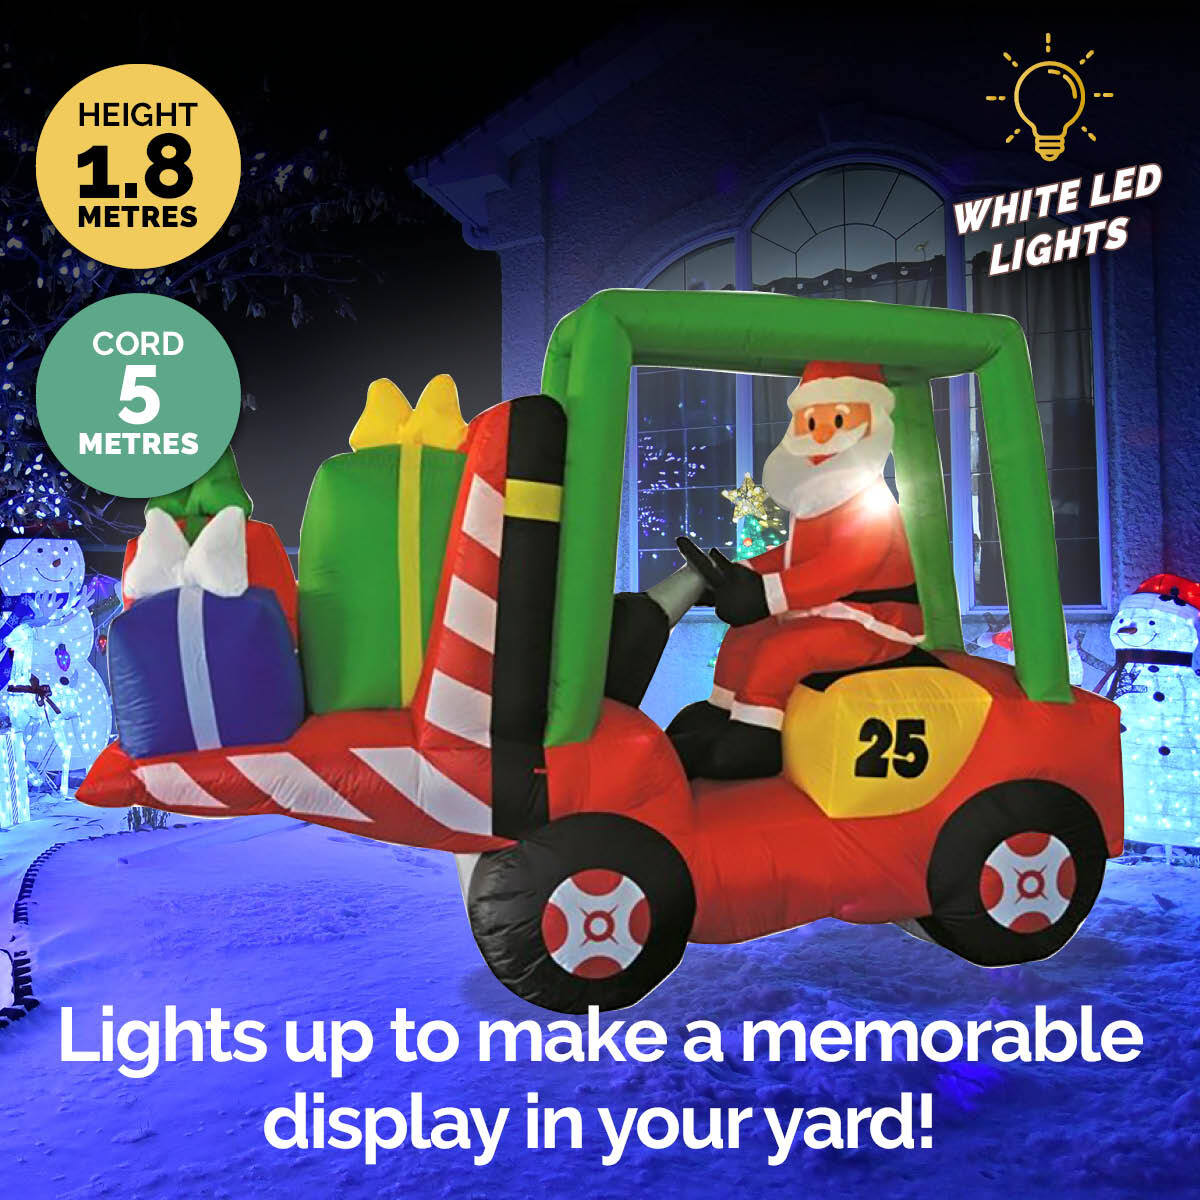 Christmas By Sas 2.4 x 1.8m Santa & Forklift Built-In Blower LED Lighting Deals499